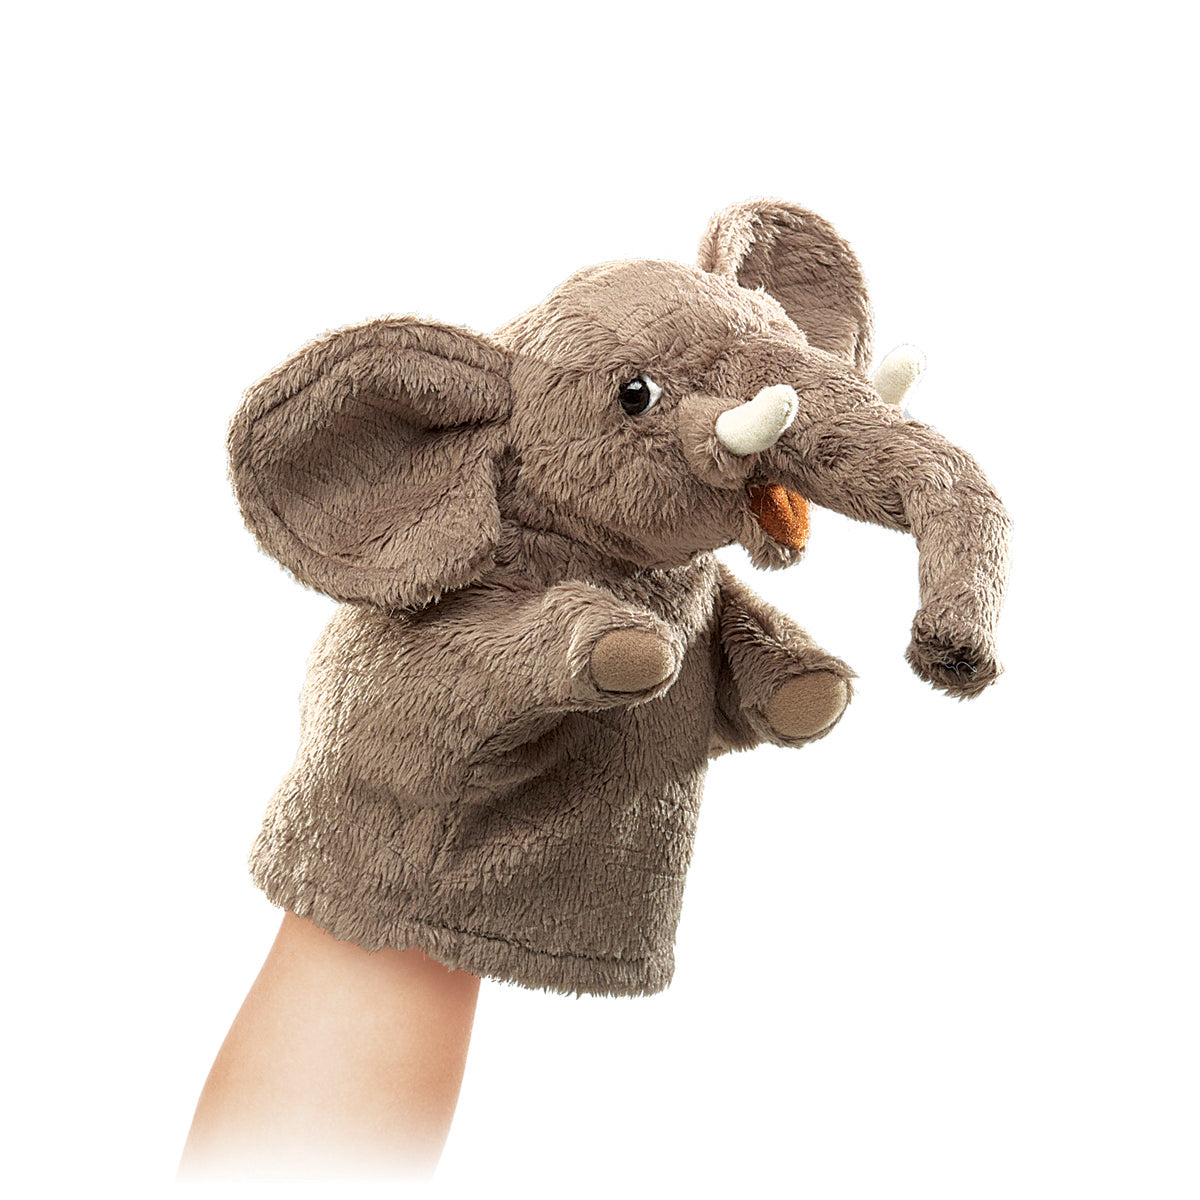 Little Elephant Hand Puppet - Folkmanis